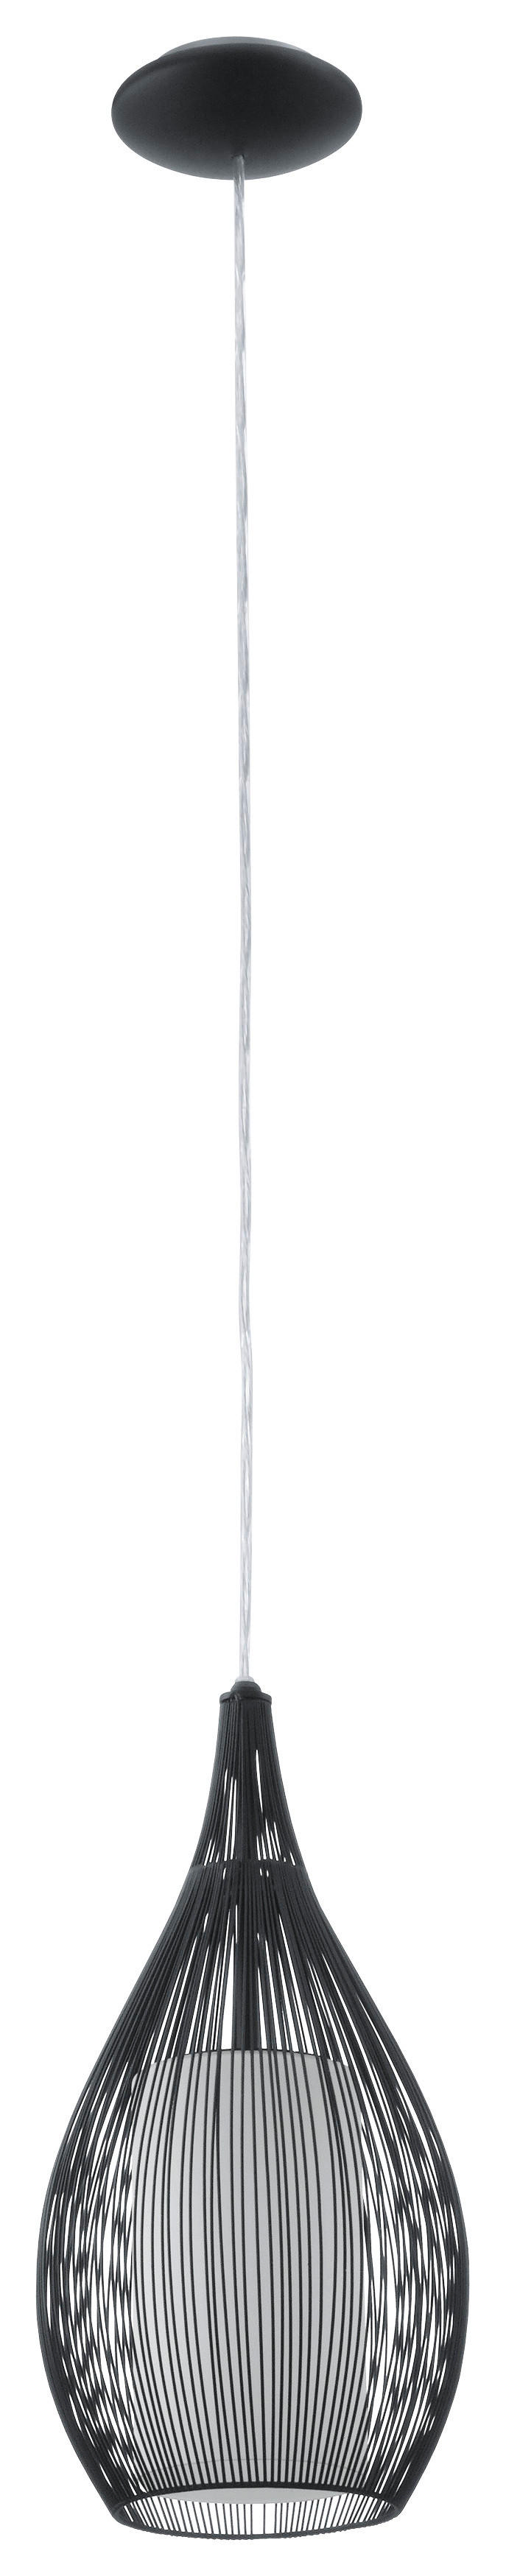 Eglo ZÁVĚSNÉ SVÍTIDLO, E27/60 W, 19/110 cm - černá,bílá